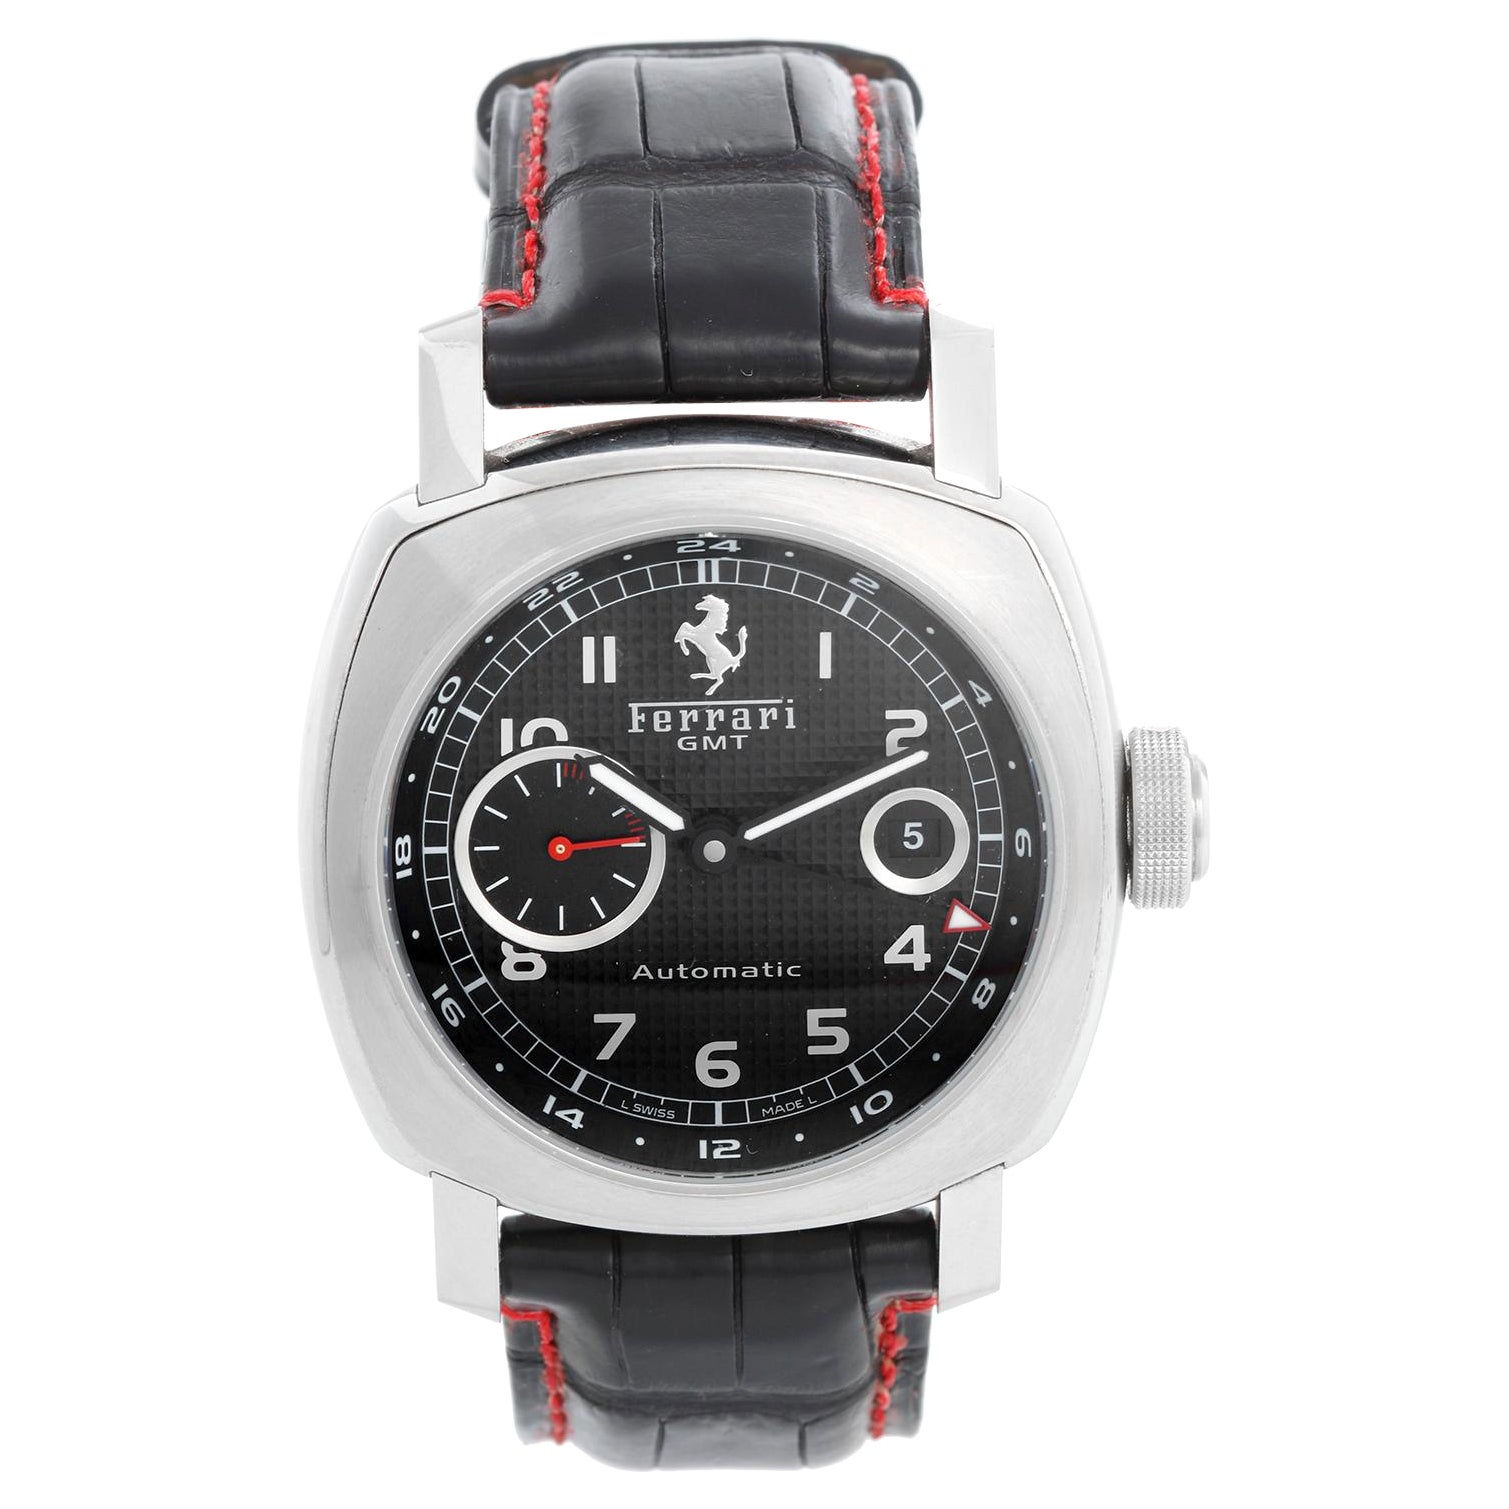 Panerai Ferrari GMT Granturismo Automatic Watch FER00003